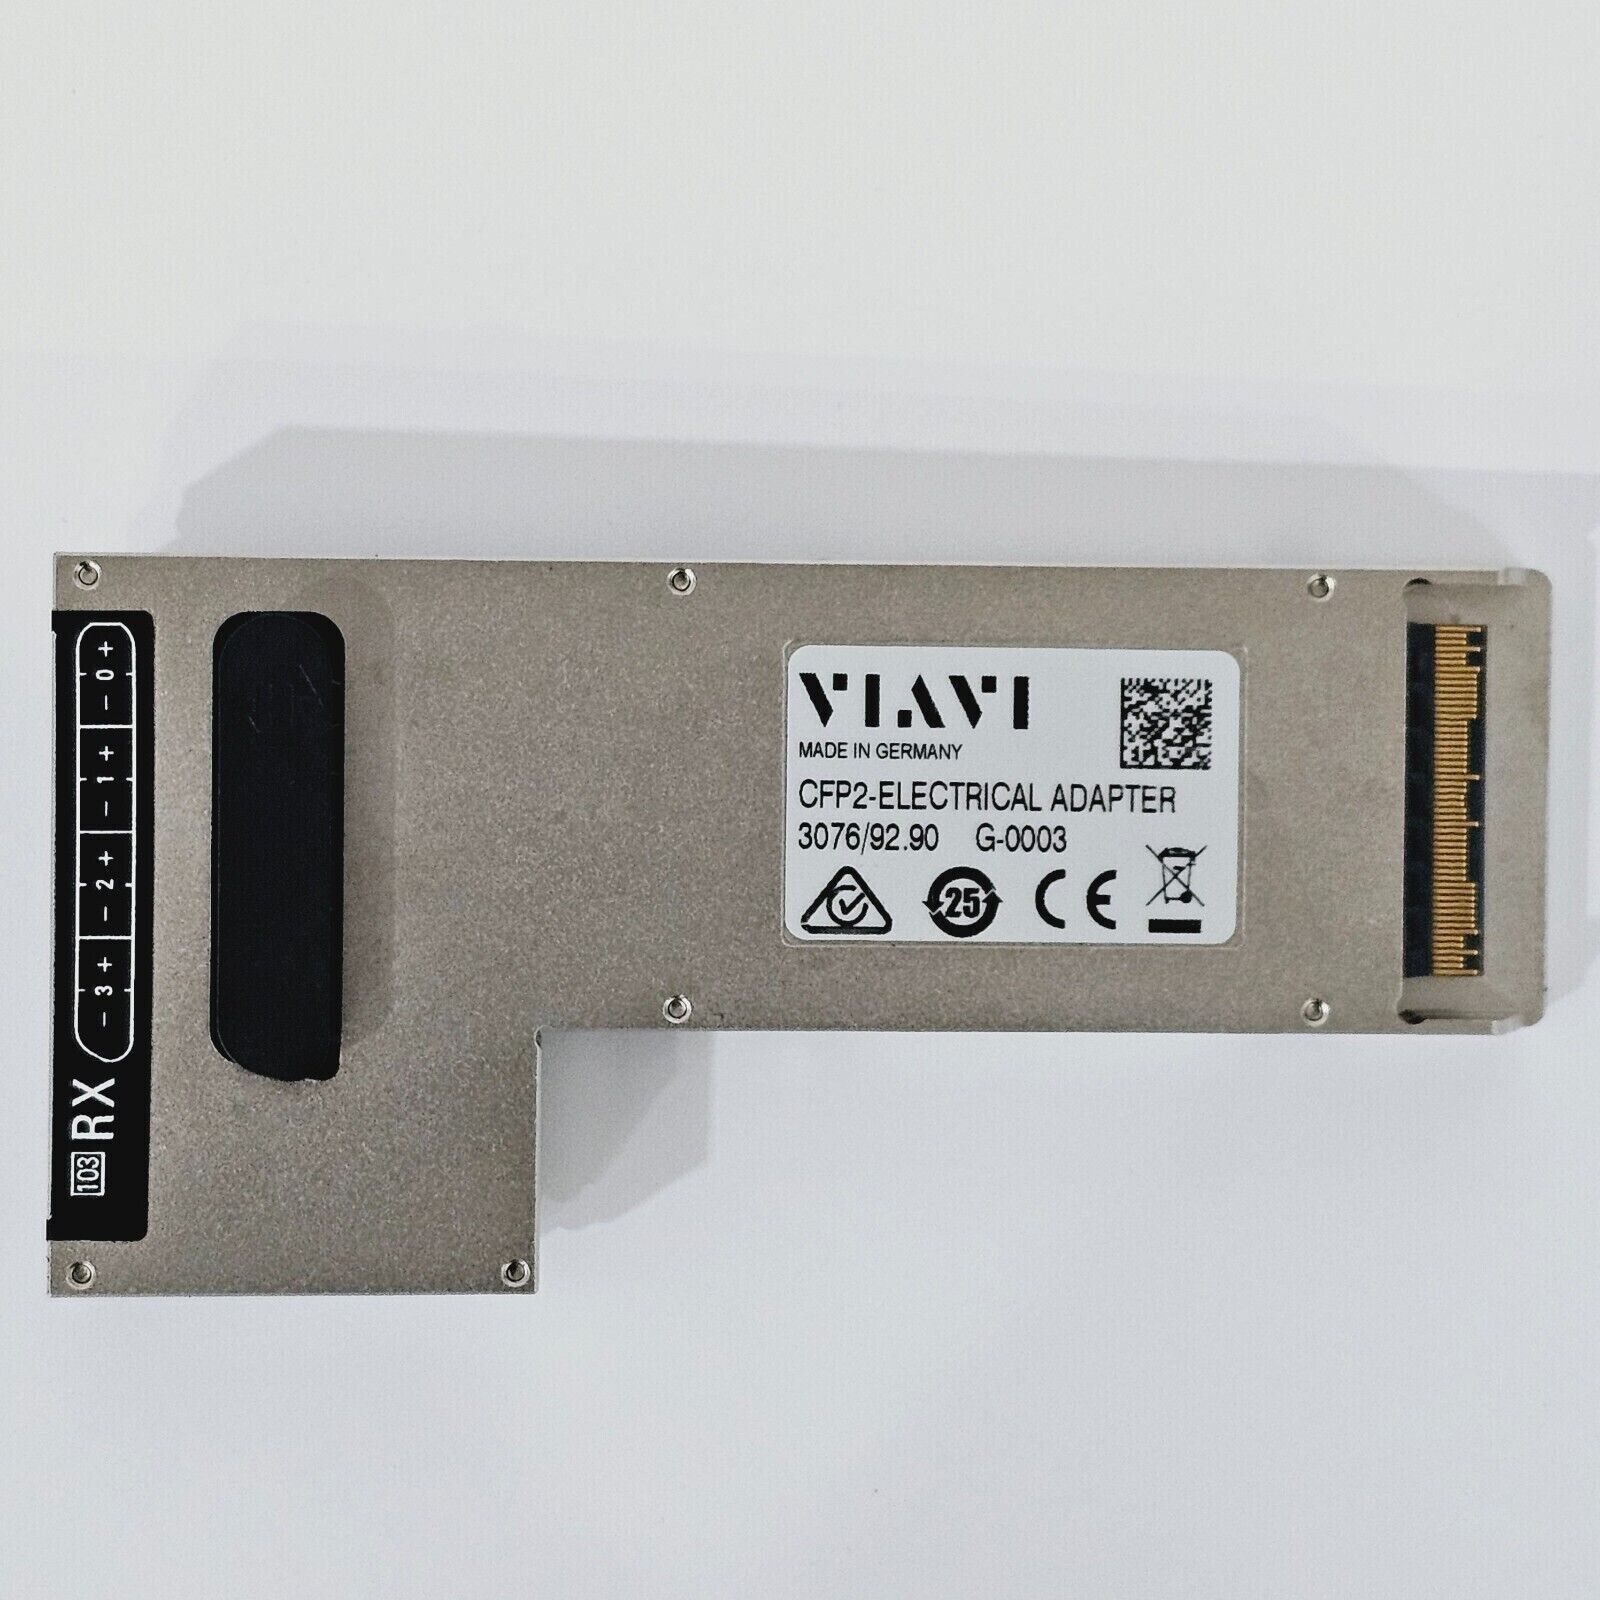 Viavi CFP2-Electrical Adapter 3076/92.90 CFP2 4x25G Electrical Adapter w/ K1001